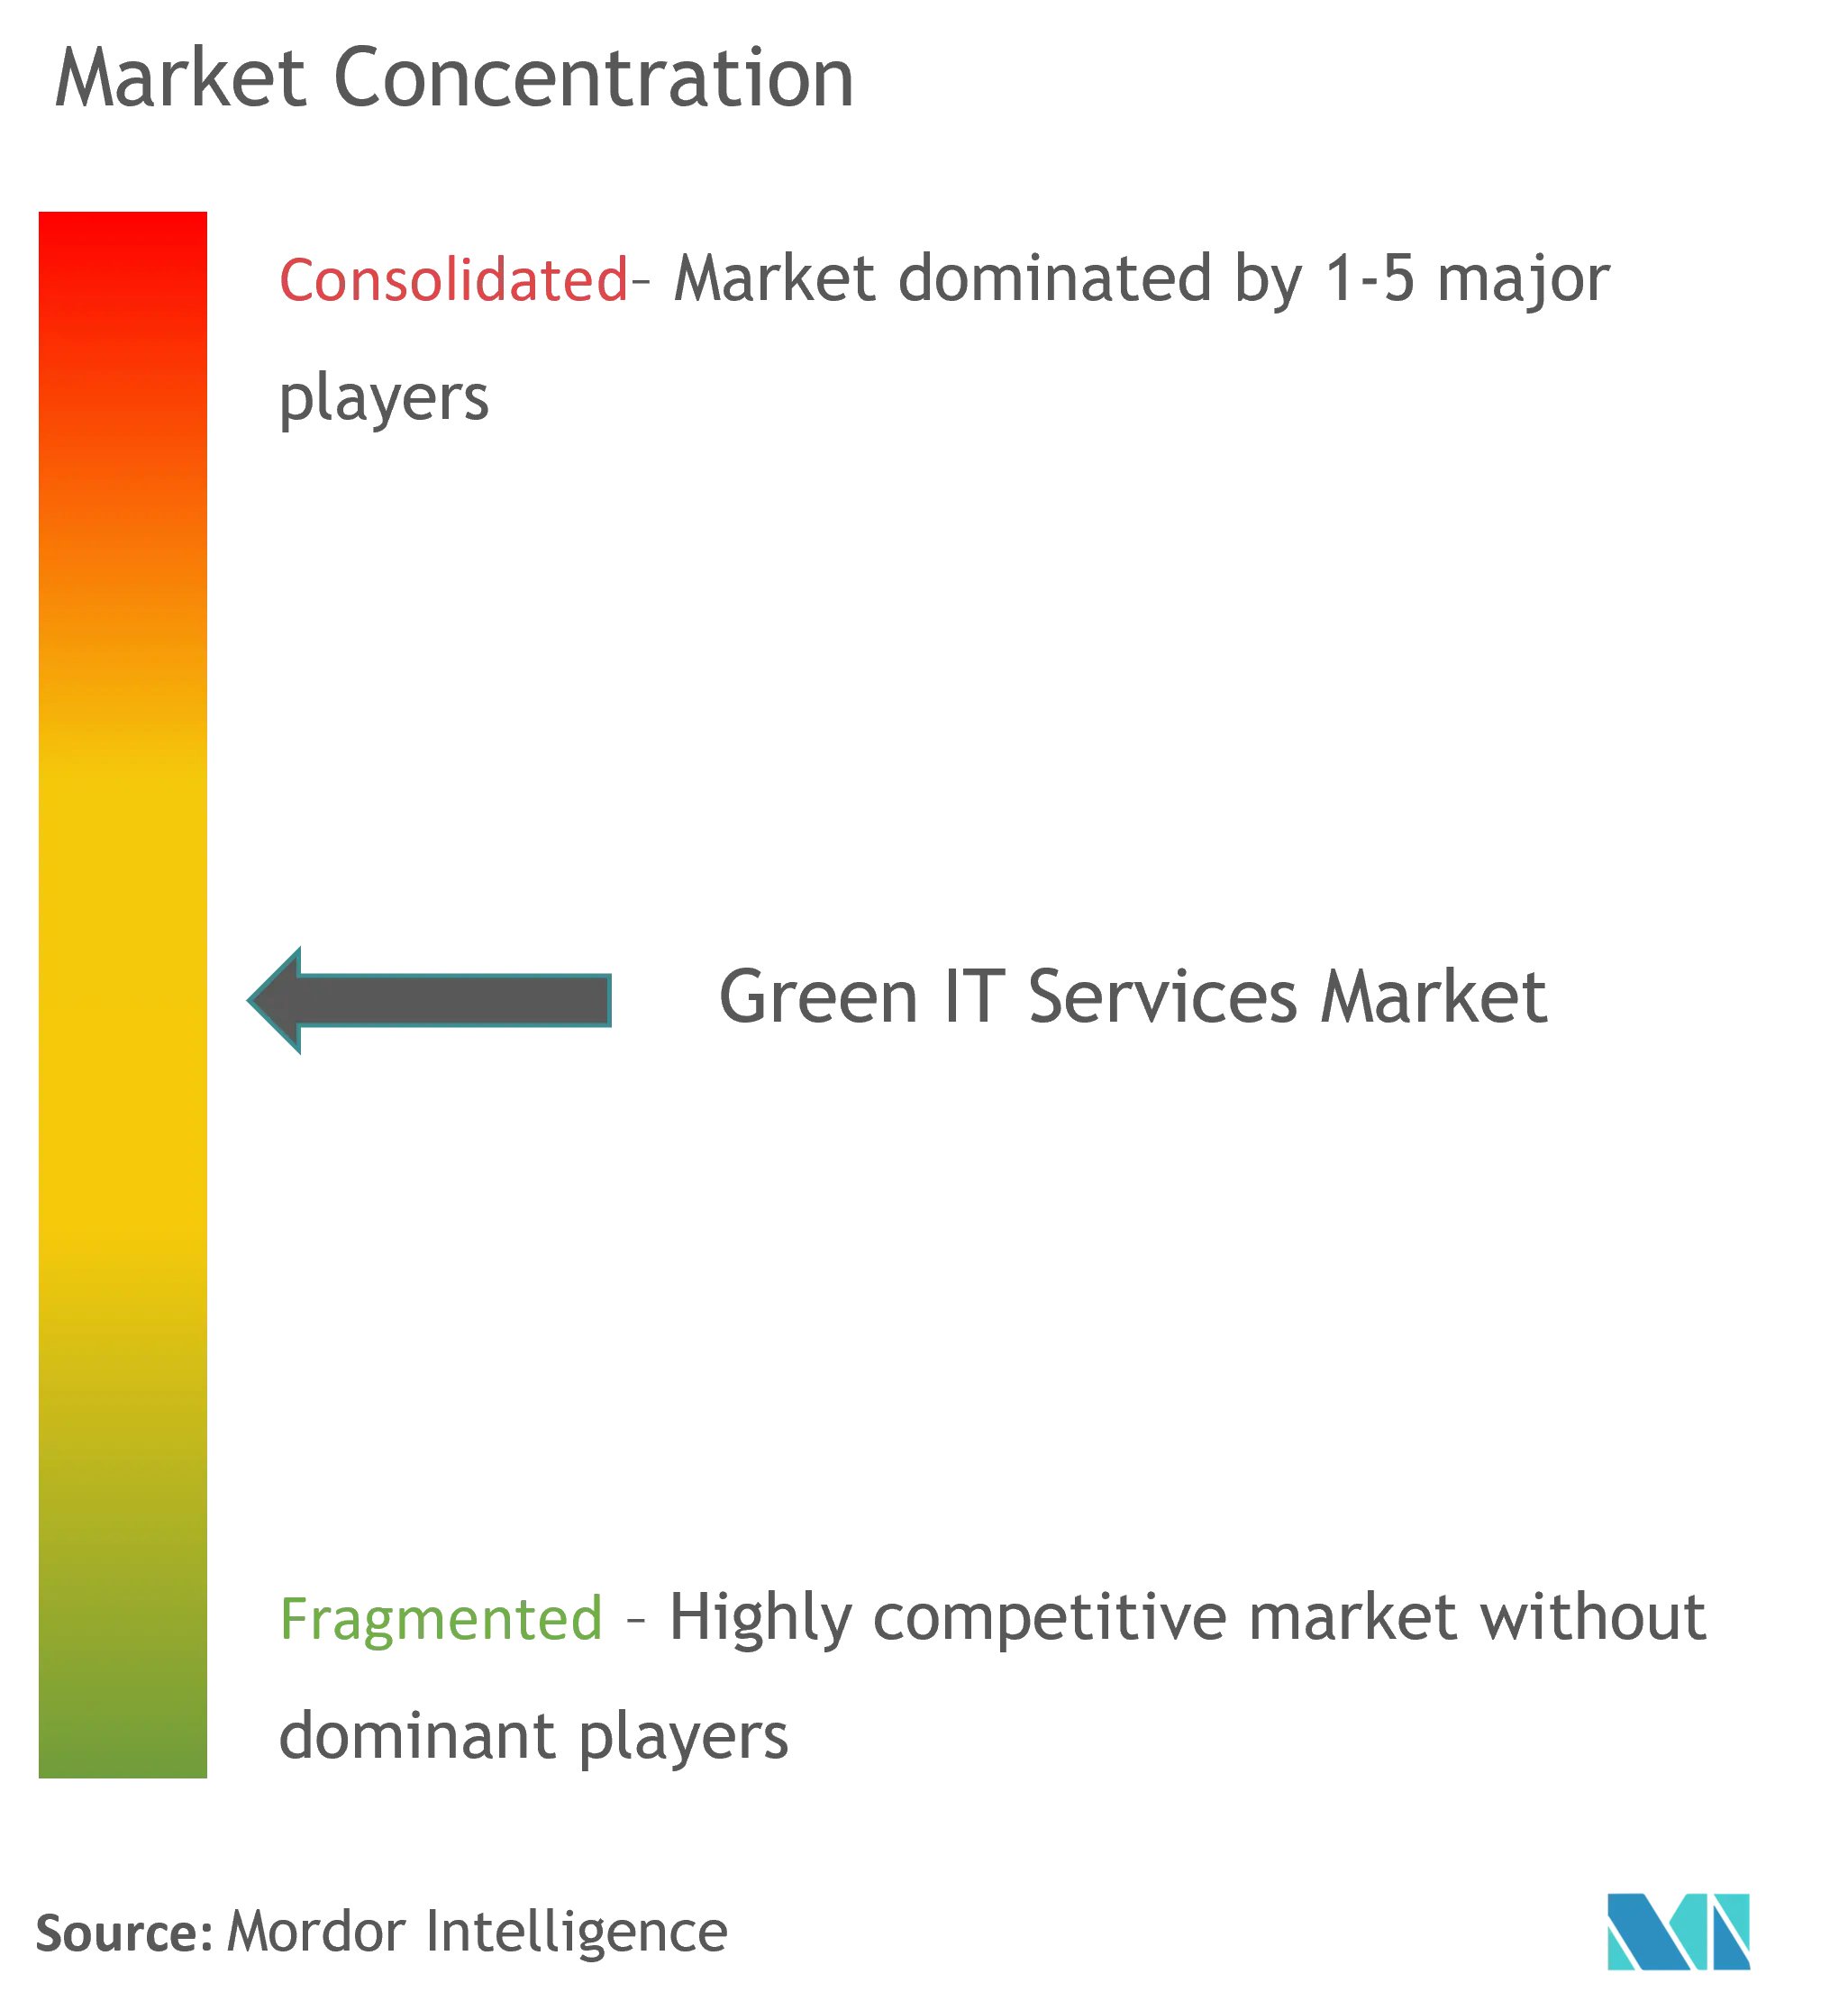 Green IT Services Market - Market Concentration.png